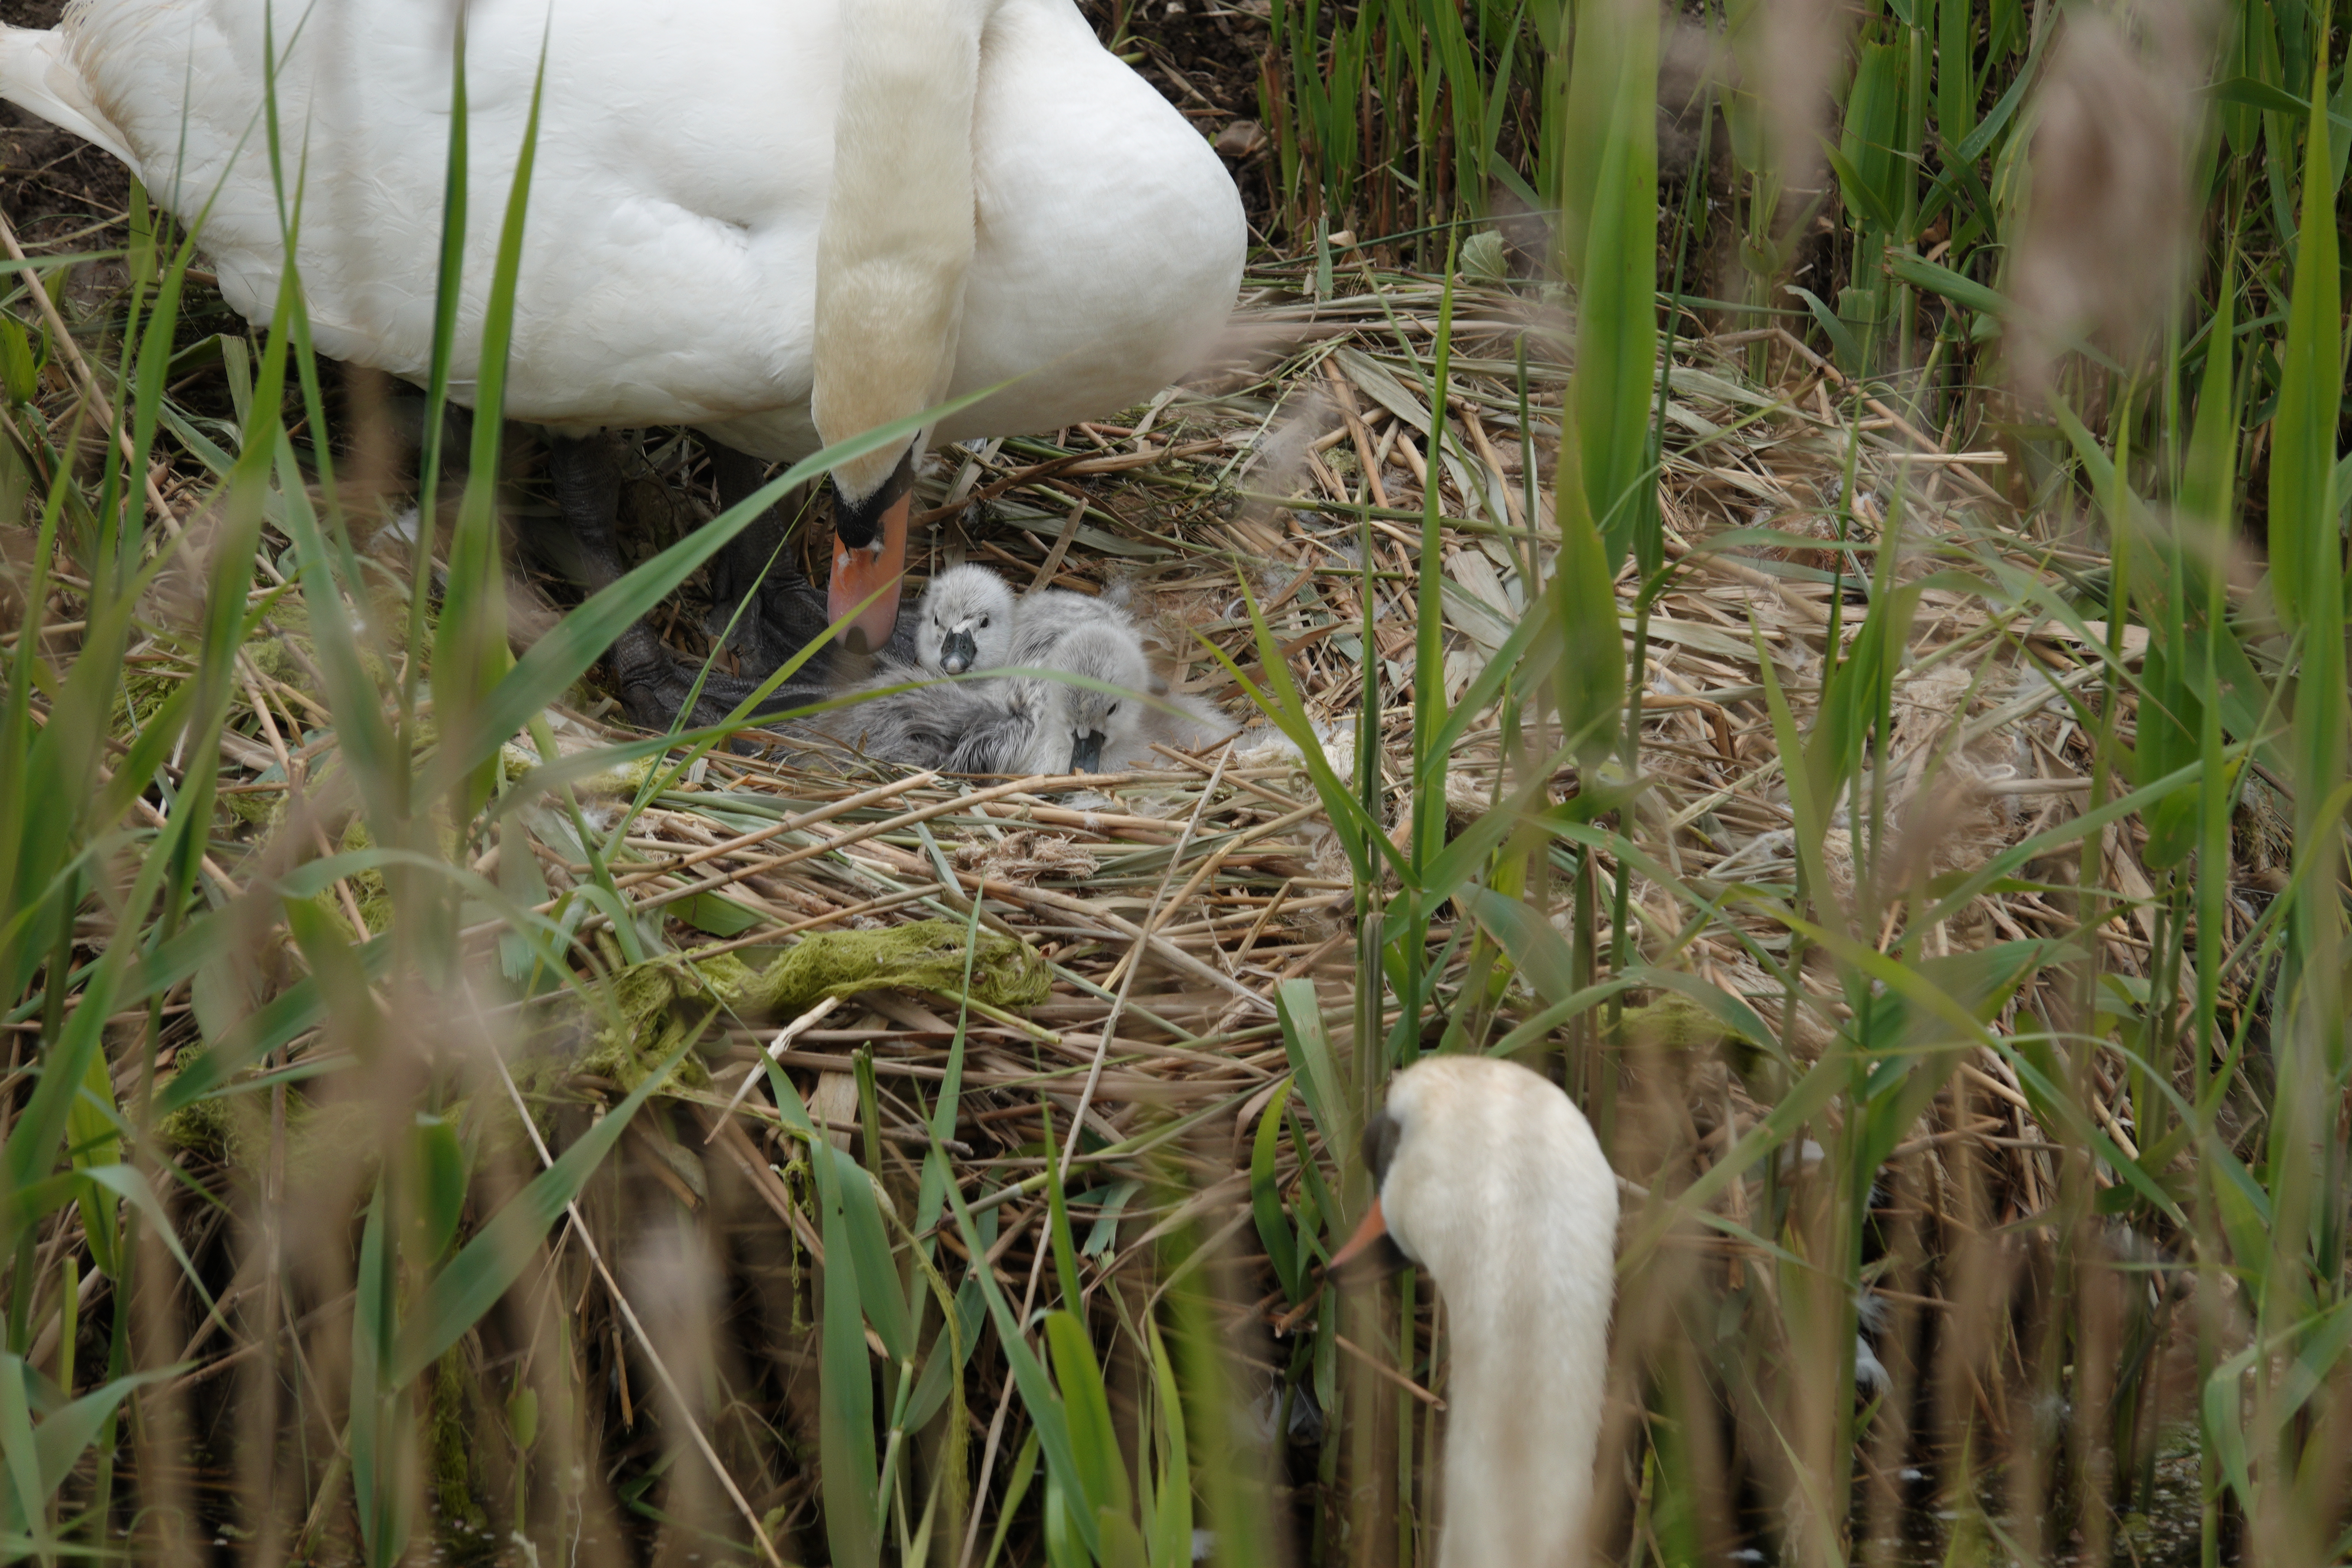 Swans with newborn cygnets